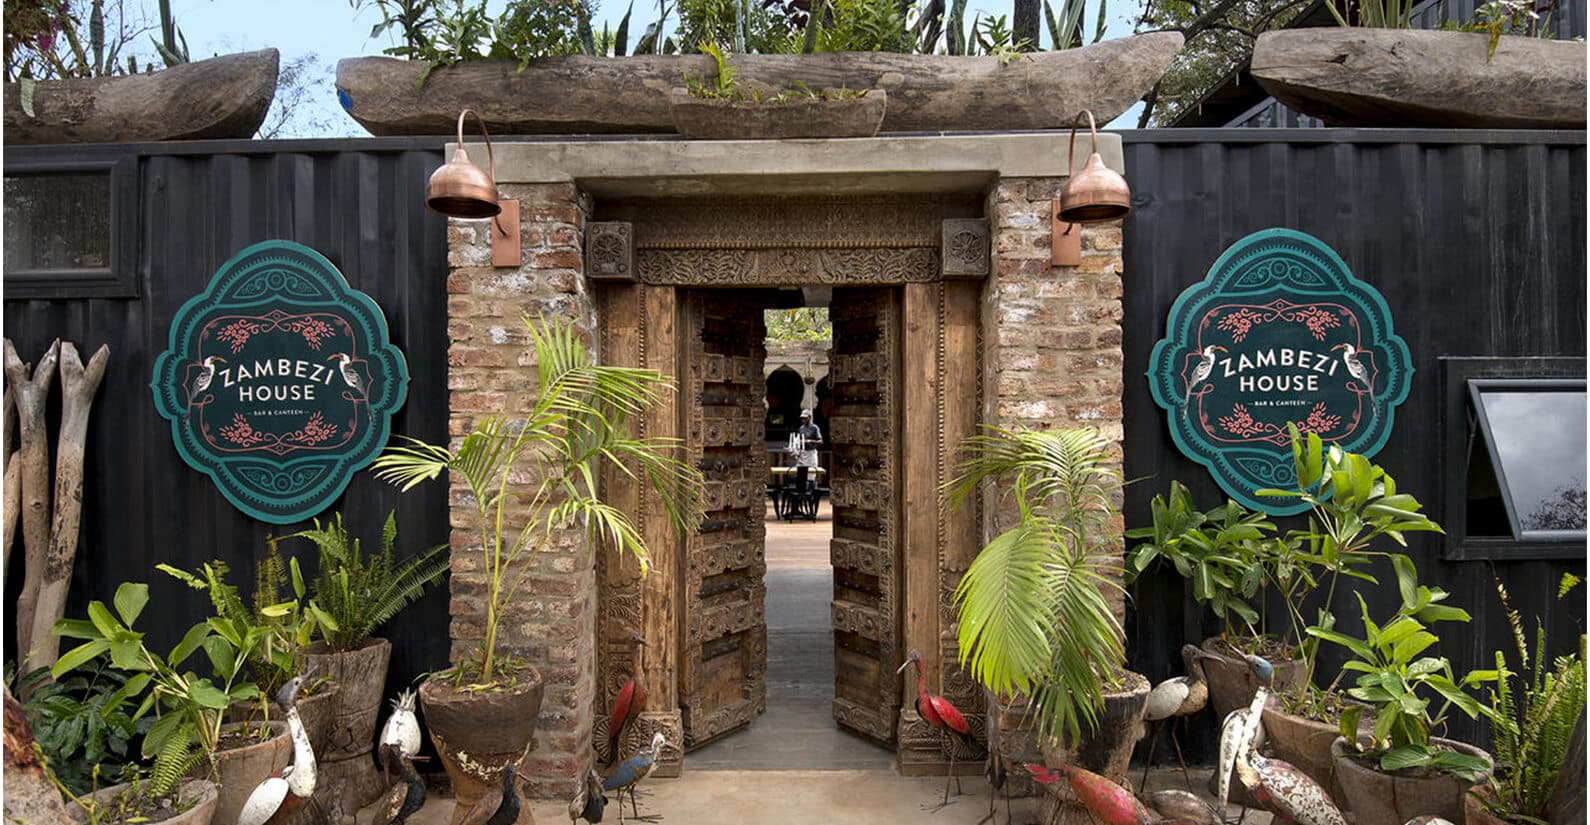 The entrance to Zambezi House.